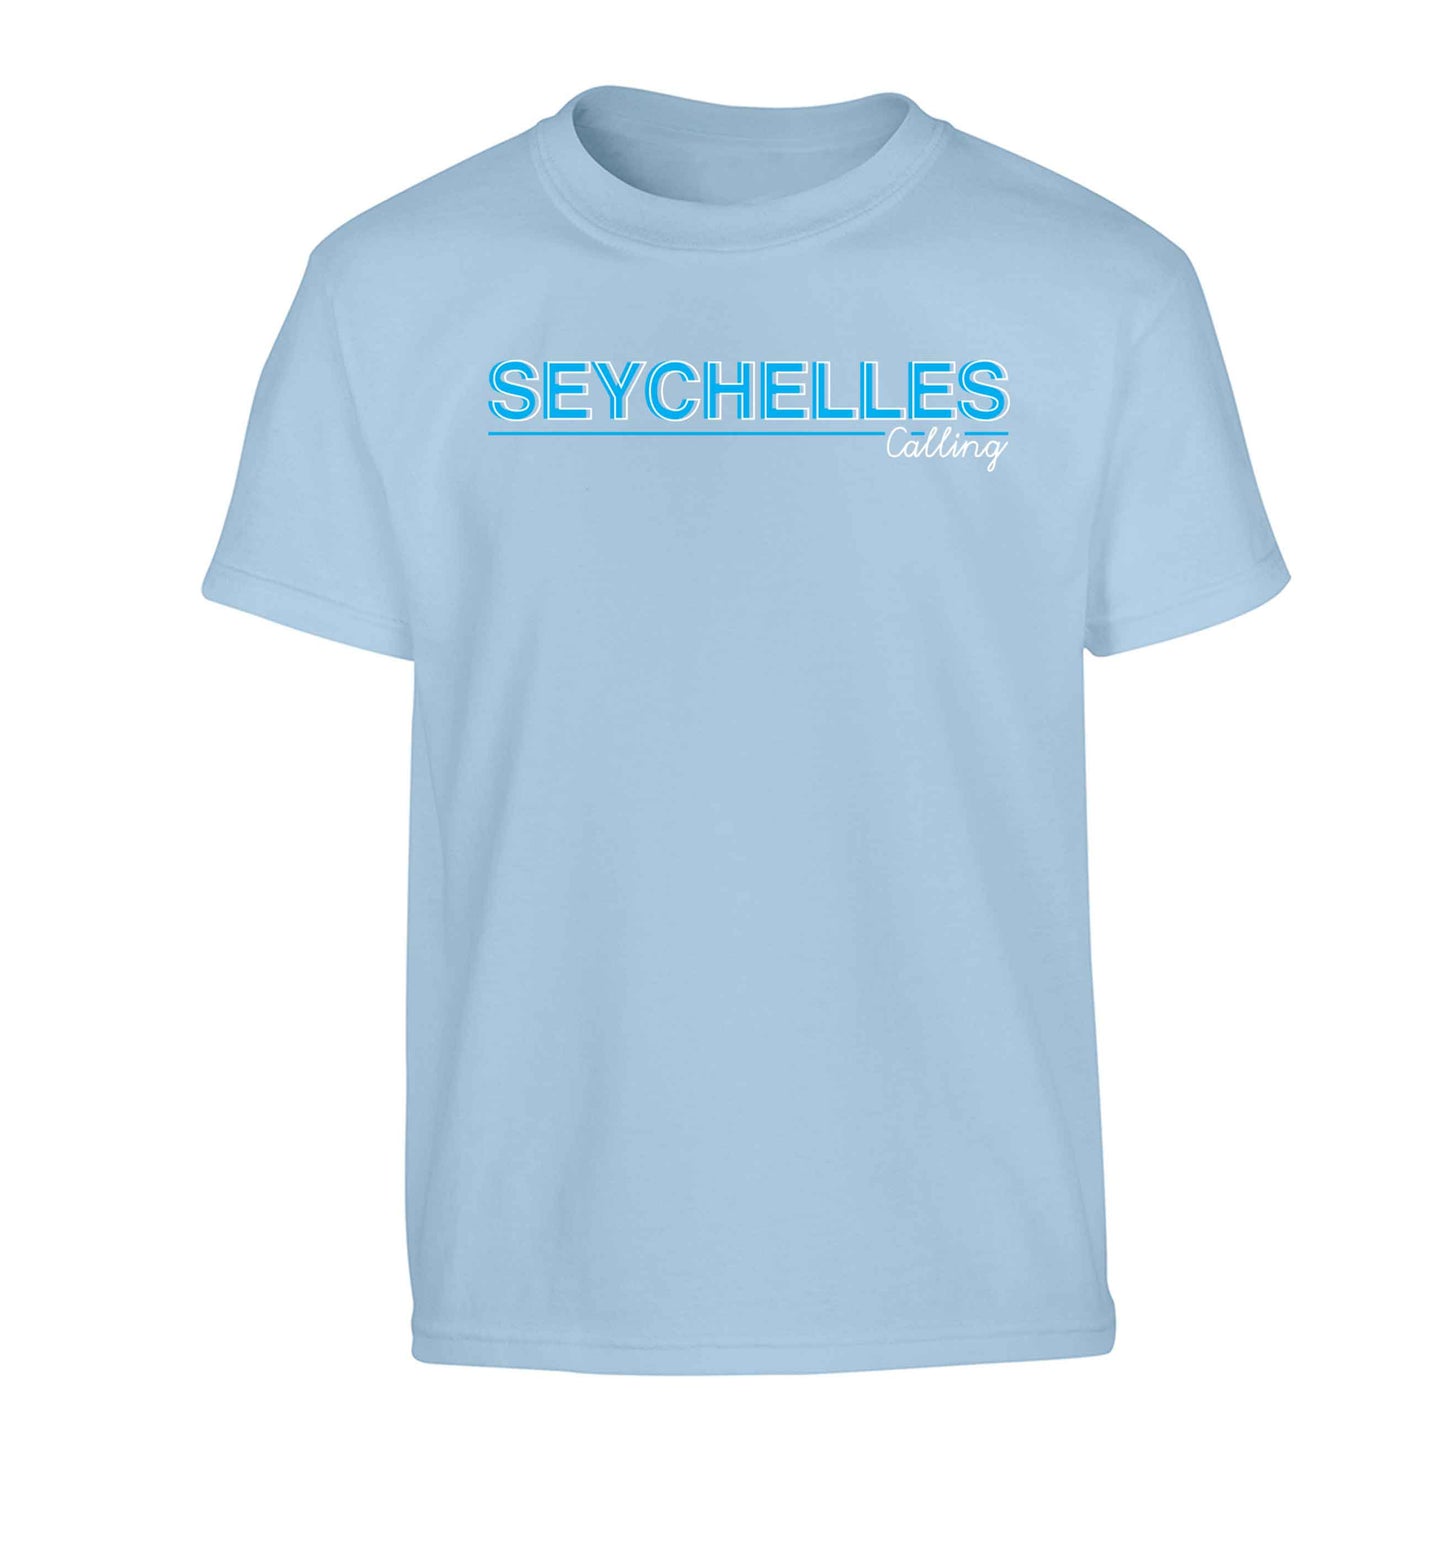 Seychelles calling Children's light blue Tshirt 12-13 Years